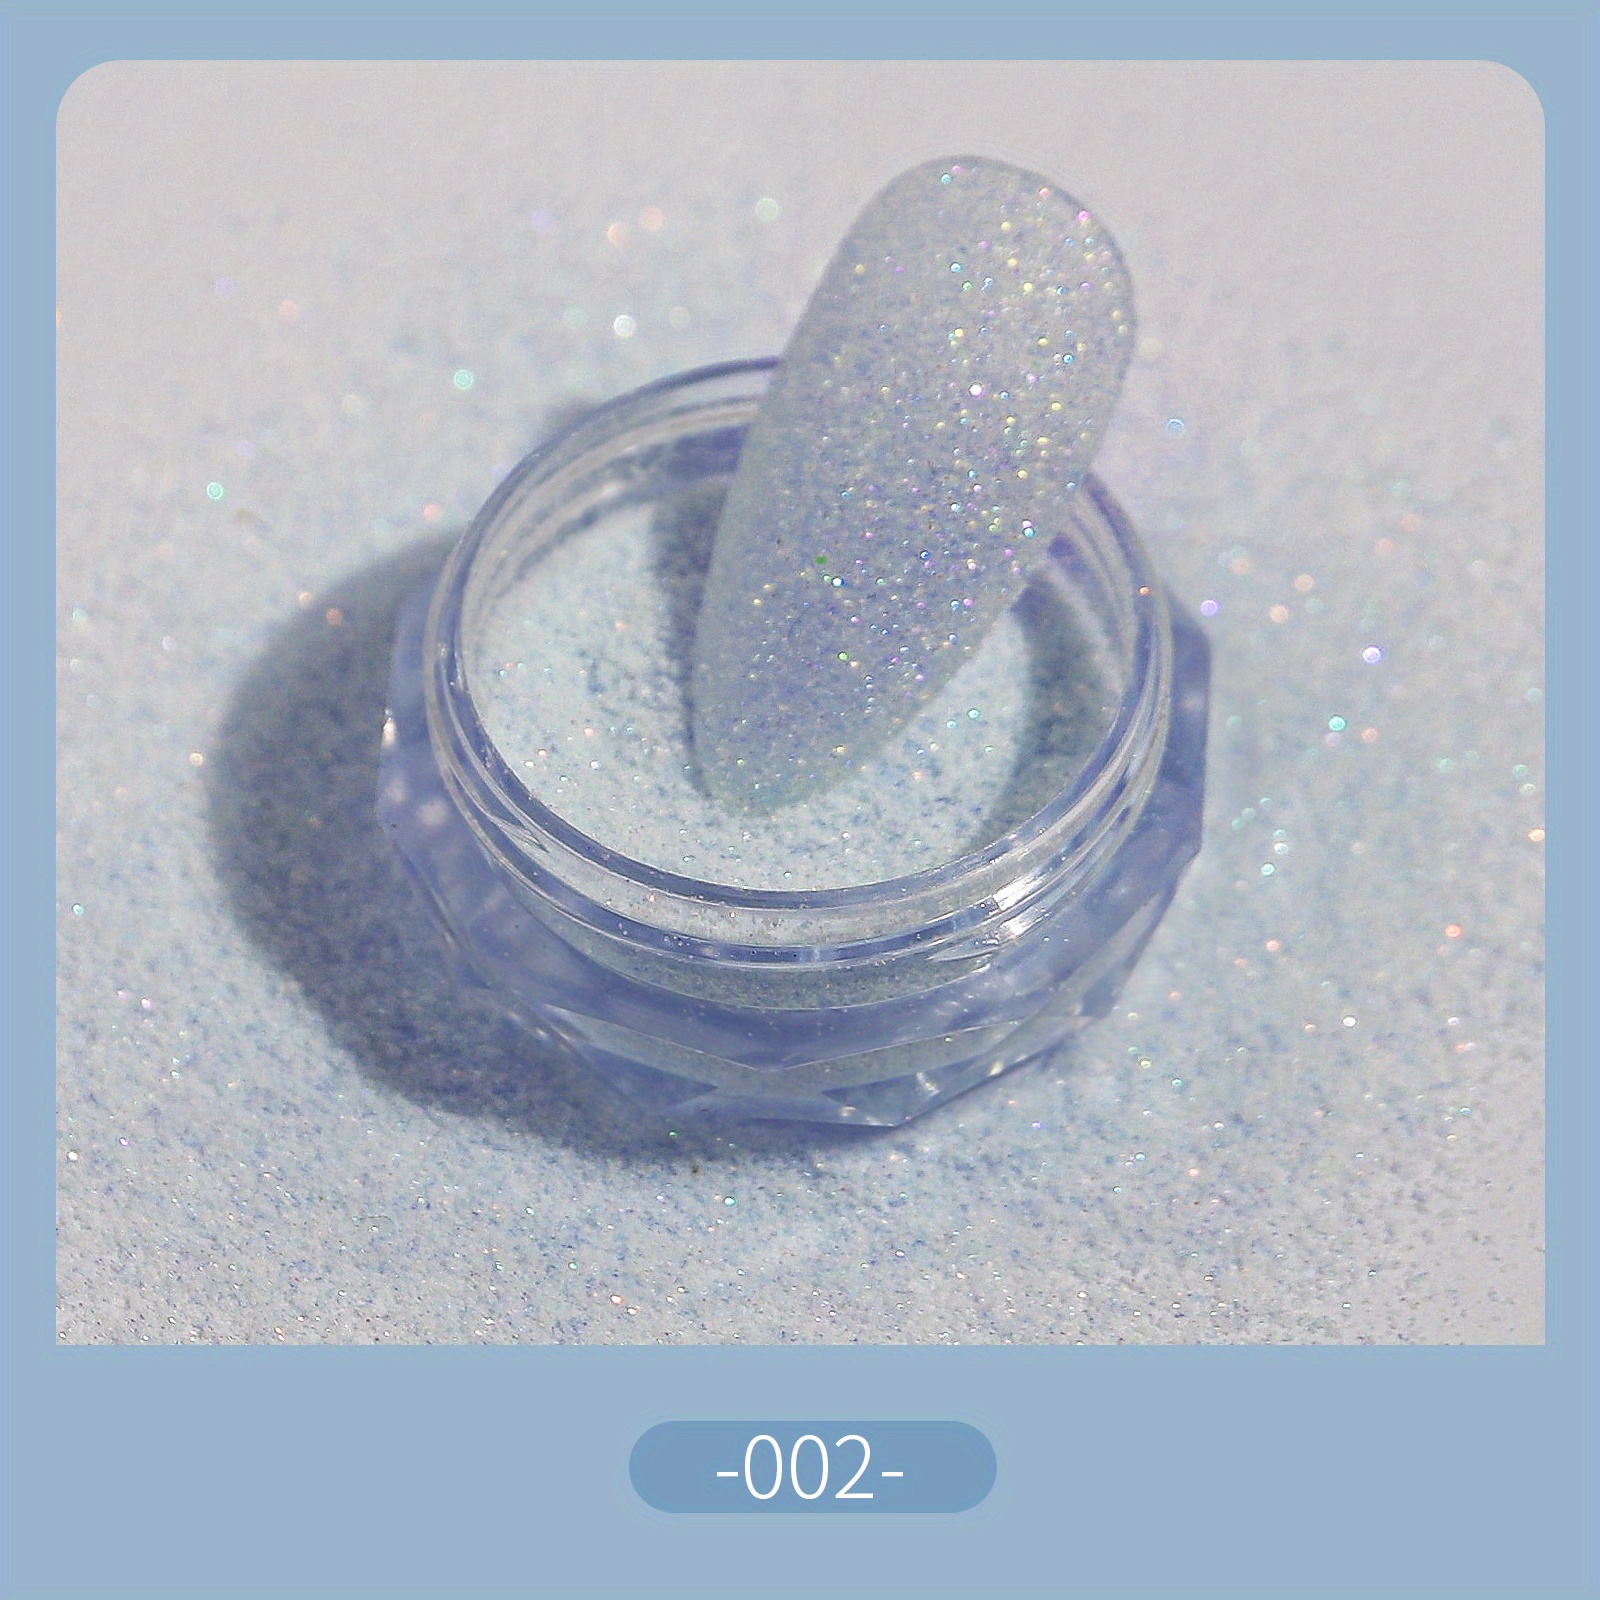 DUHGBNE Reflective Glitter Gel Polish Sugar Diamond Nail Powder Silver  Sparkling Dust Sand Powder Candy Coat Manicure For Nail Decorations